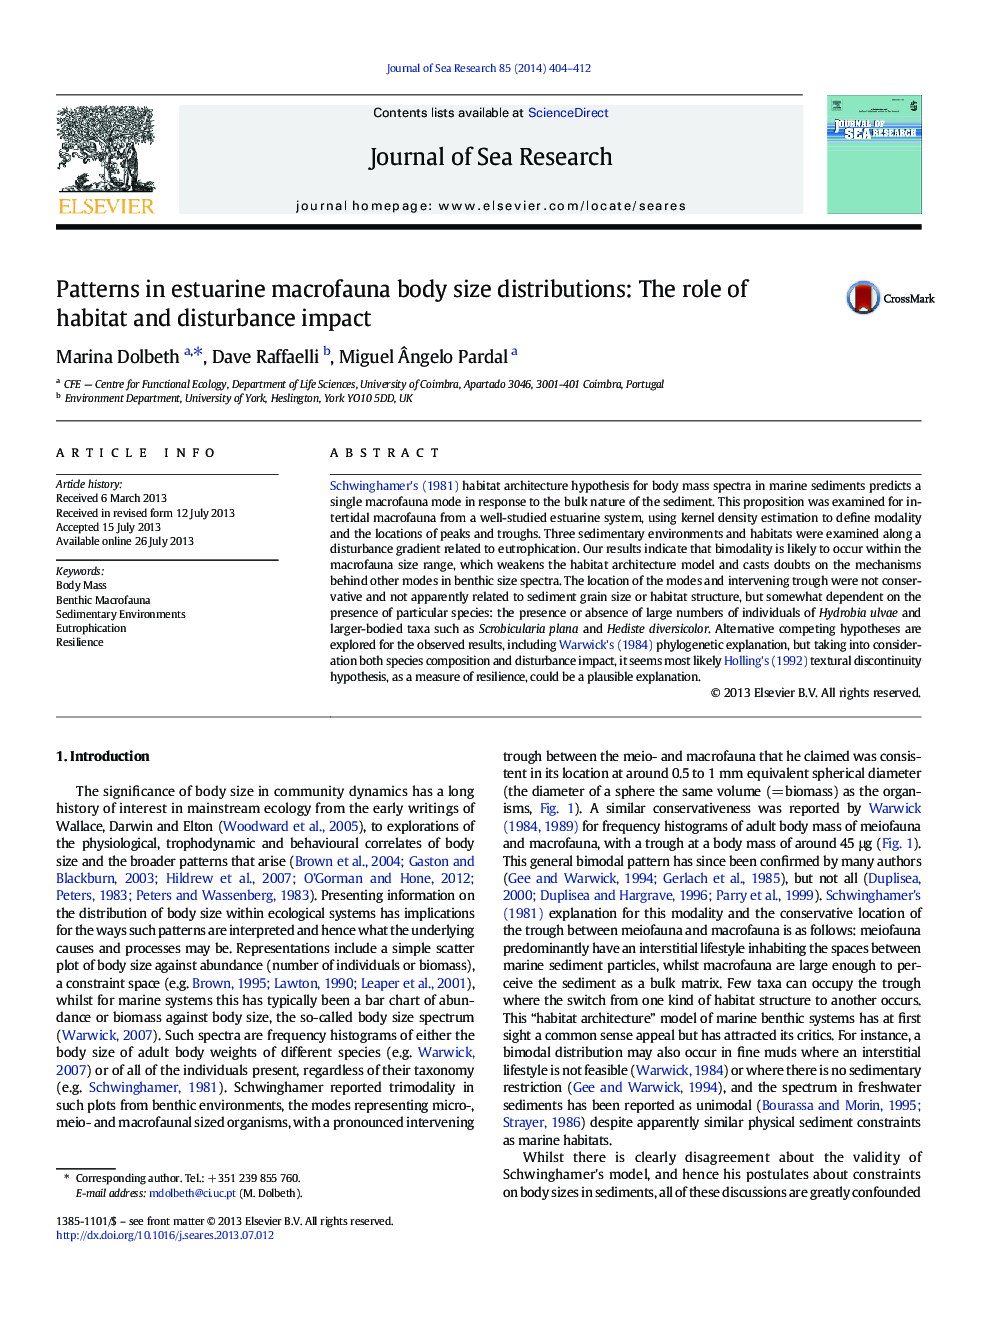 Patterns in estuarine macrofauna body size distributions: The role of habitat and disturbance impact